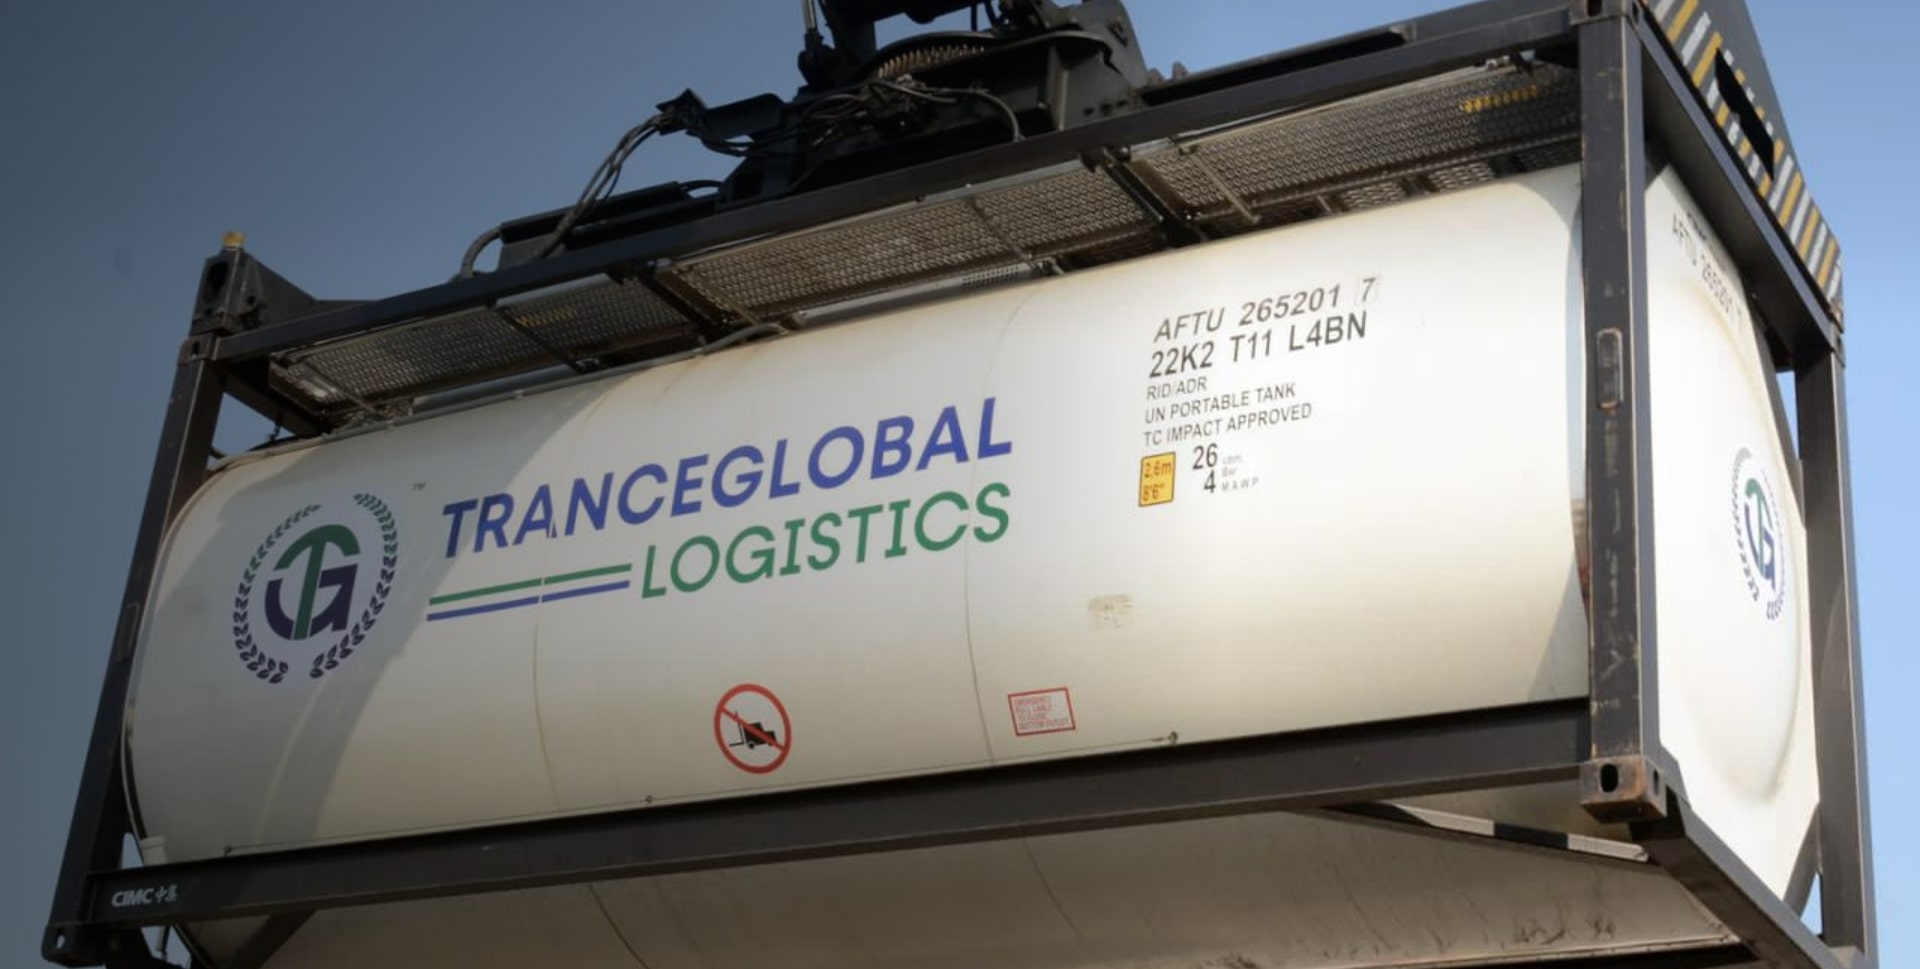 Tranceglobal Logistics banner